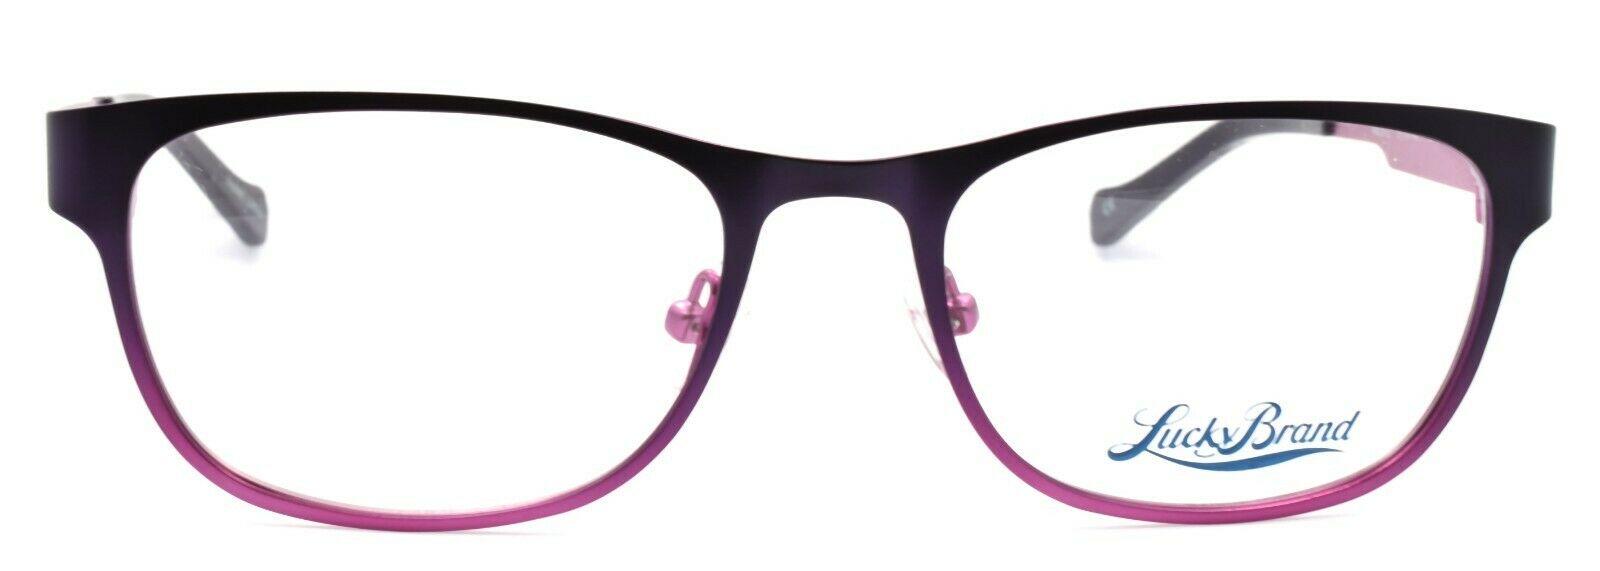 2-LUCKY BRAND Pacific Women's Eyeglasses Frames 51-18-140 Purple Gradient + CASE-751286256536-IKSpecs